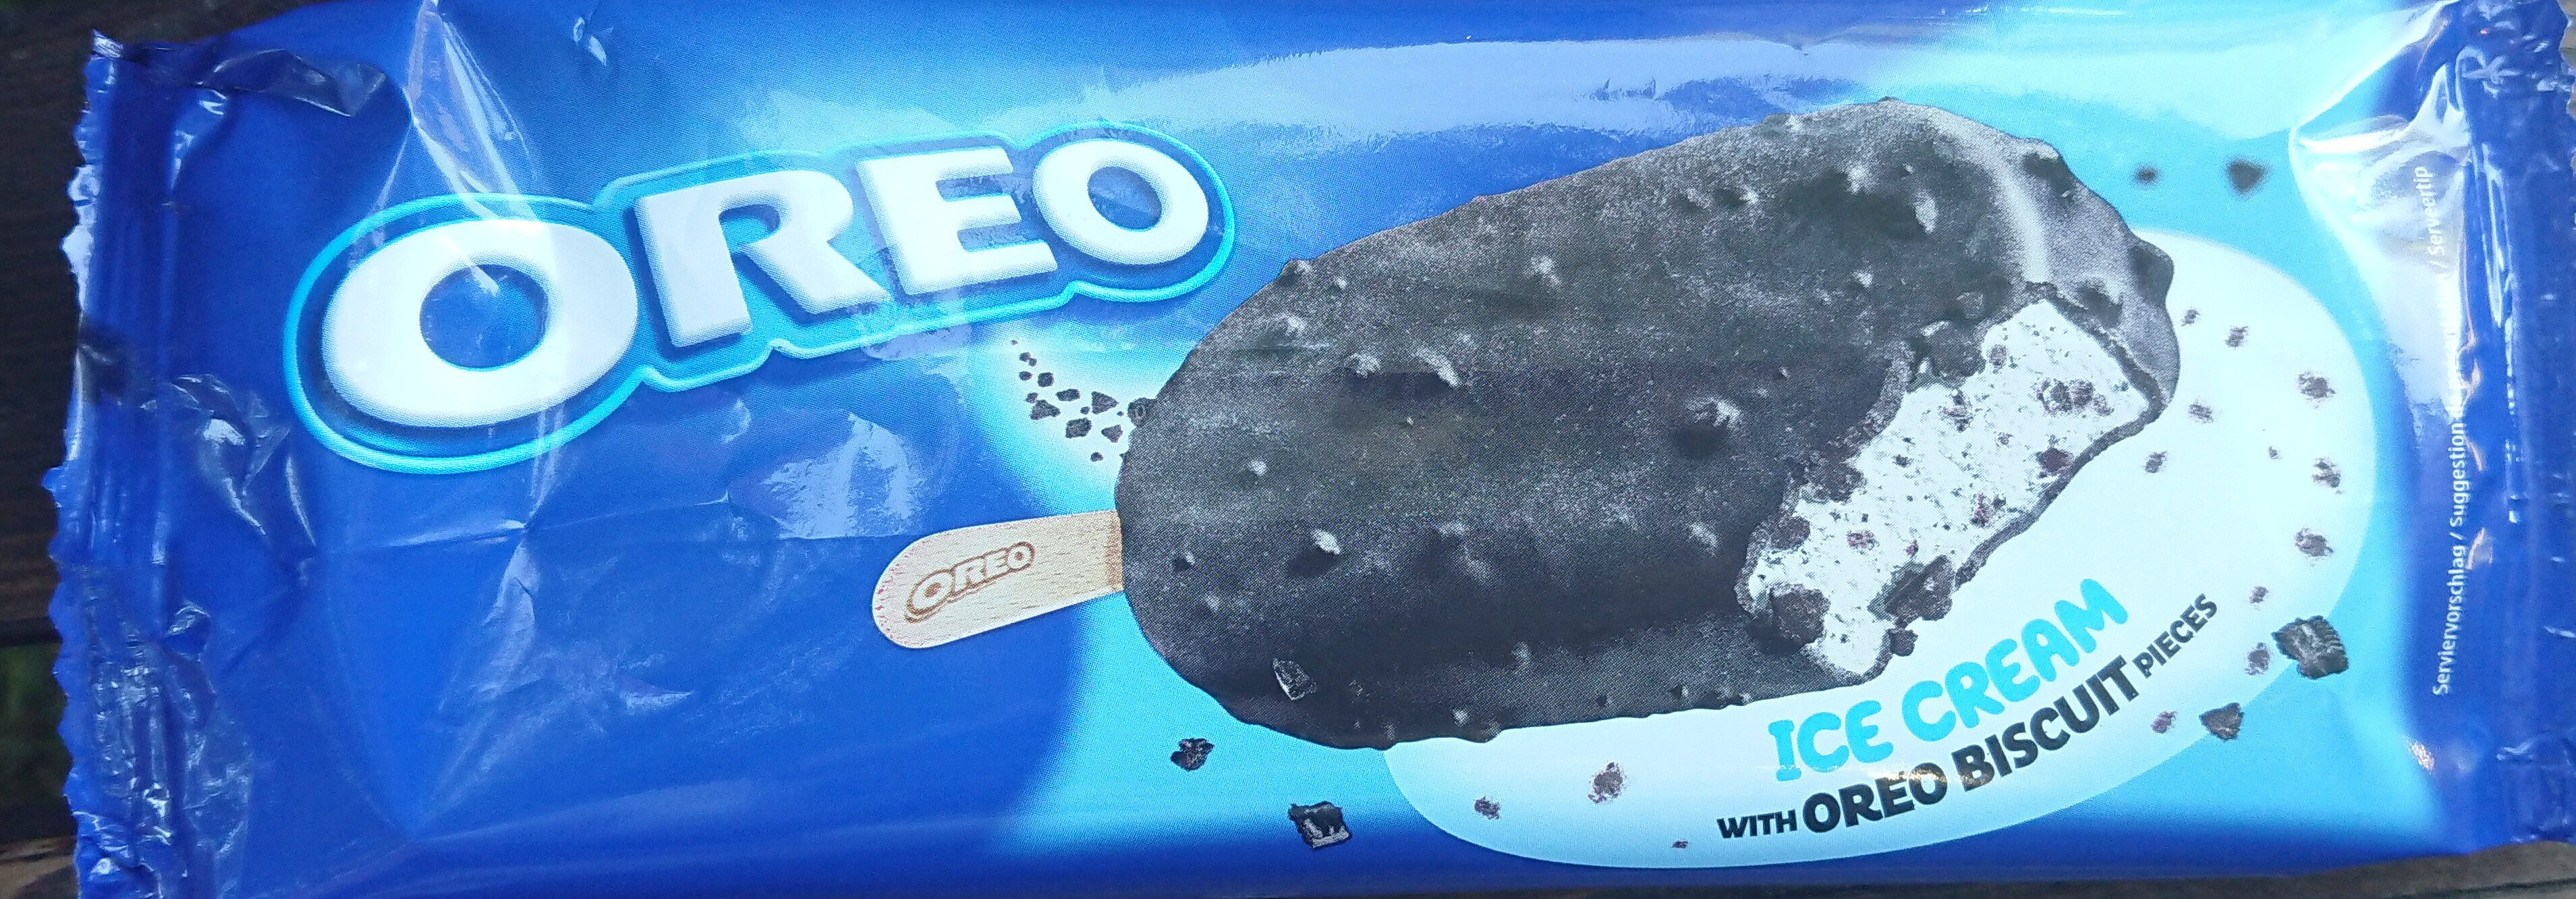 Oreo Ice Cream Stick - Produkt